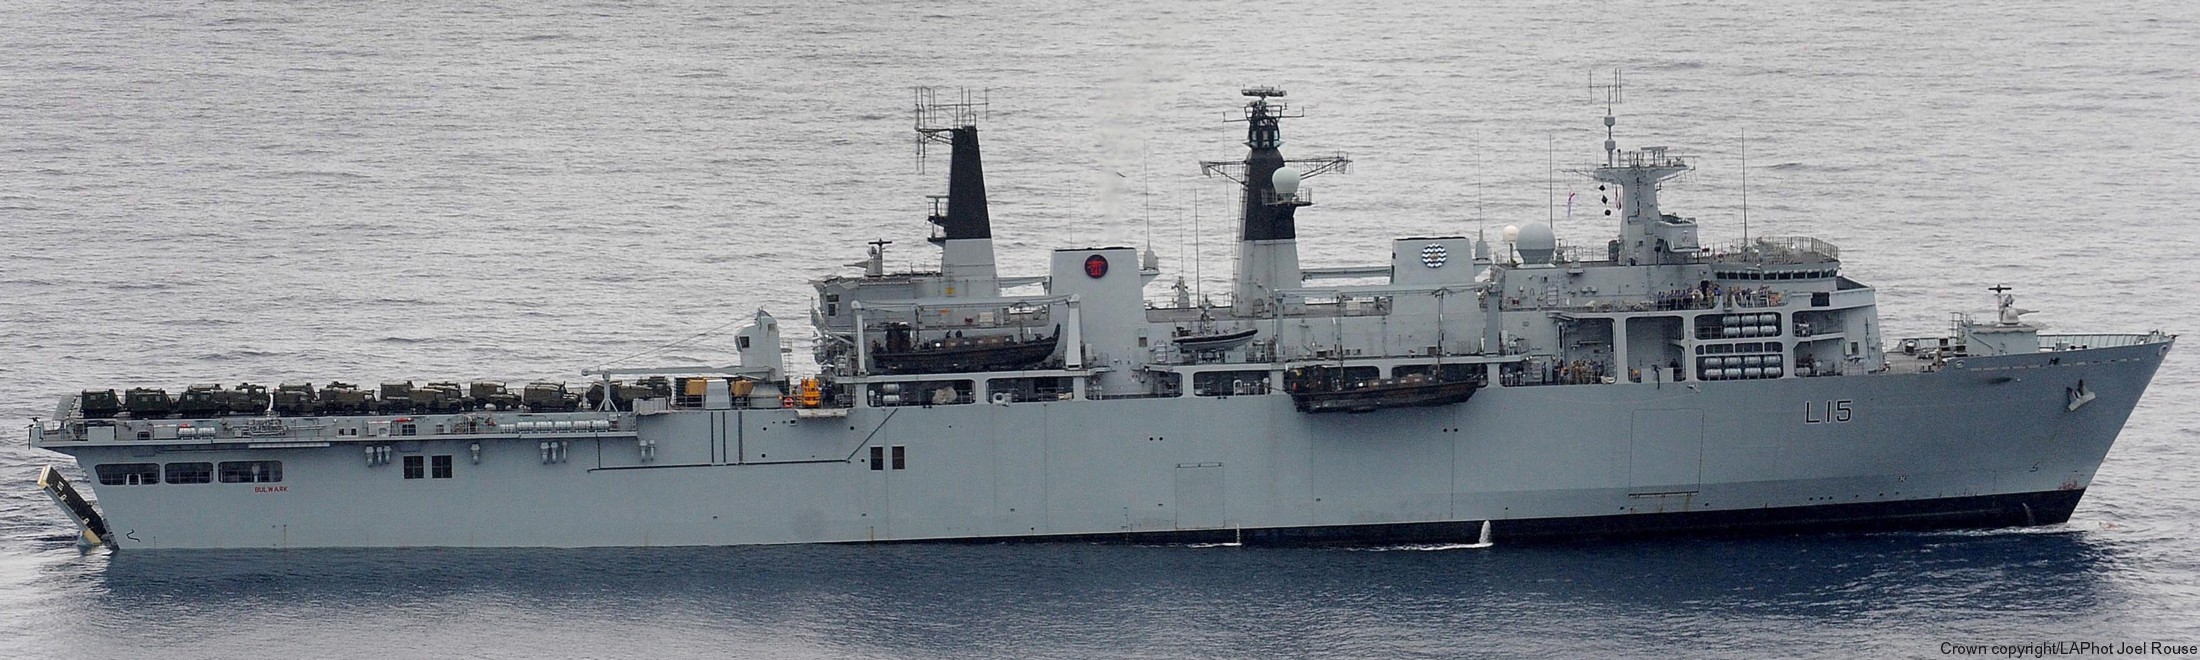 hms bulwark l-15 albion class amphibious transport dock lpd royal navy 08